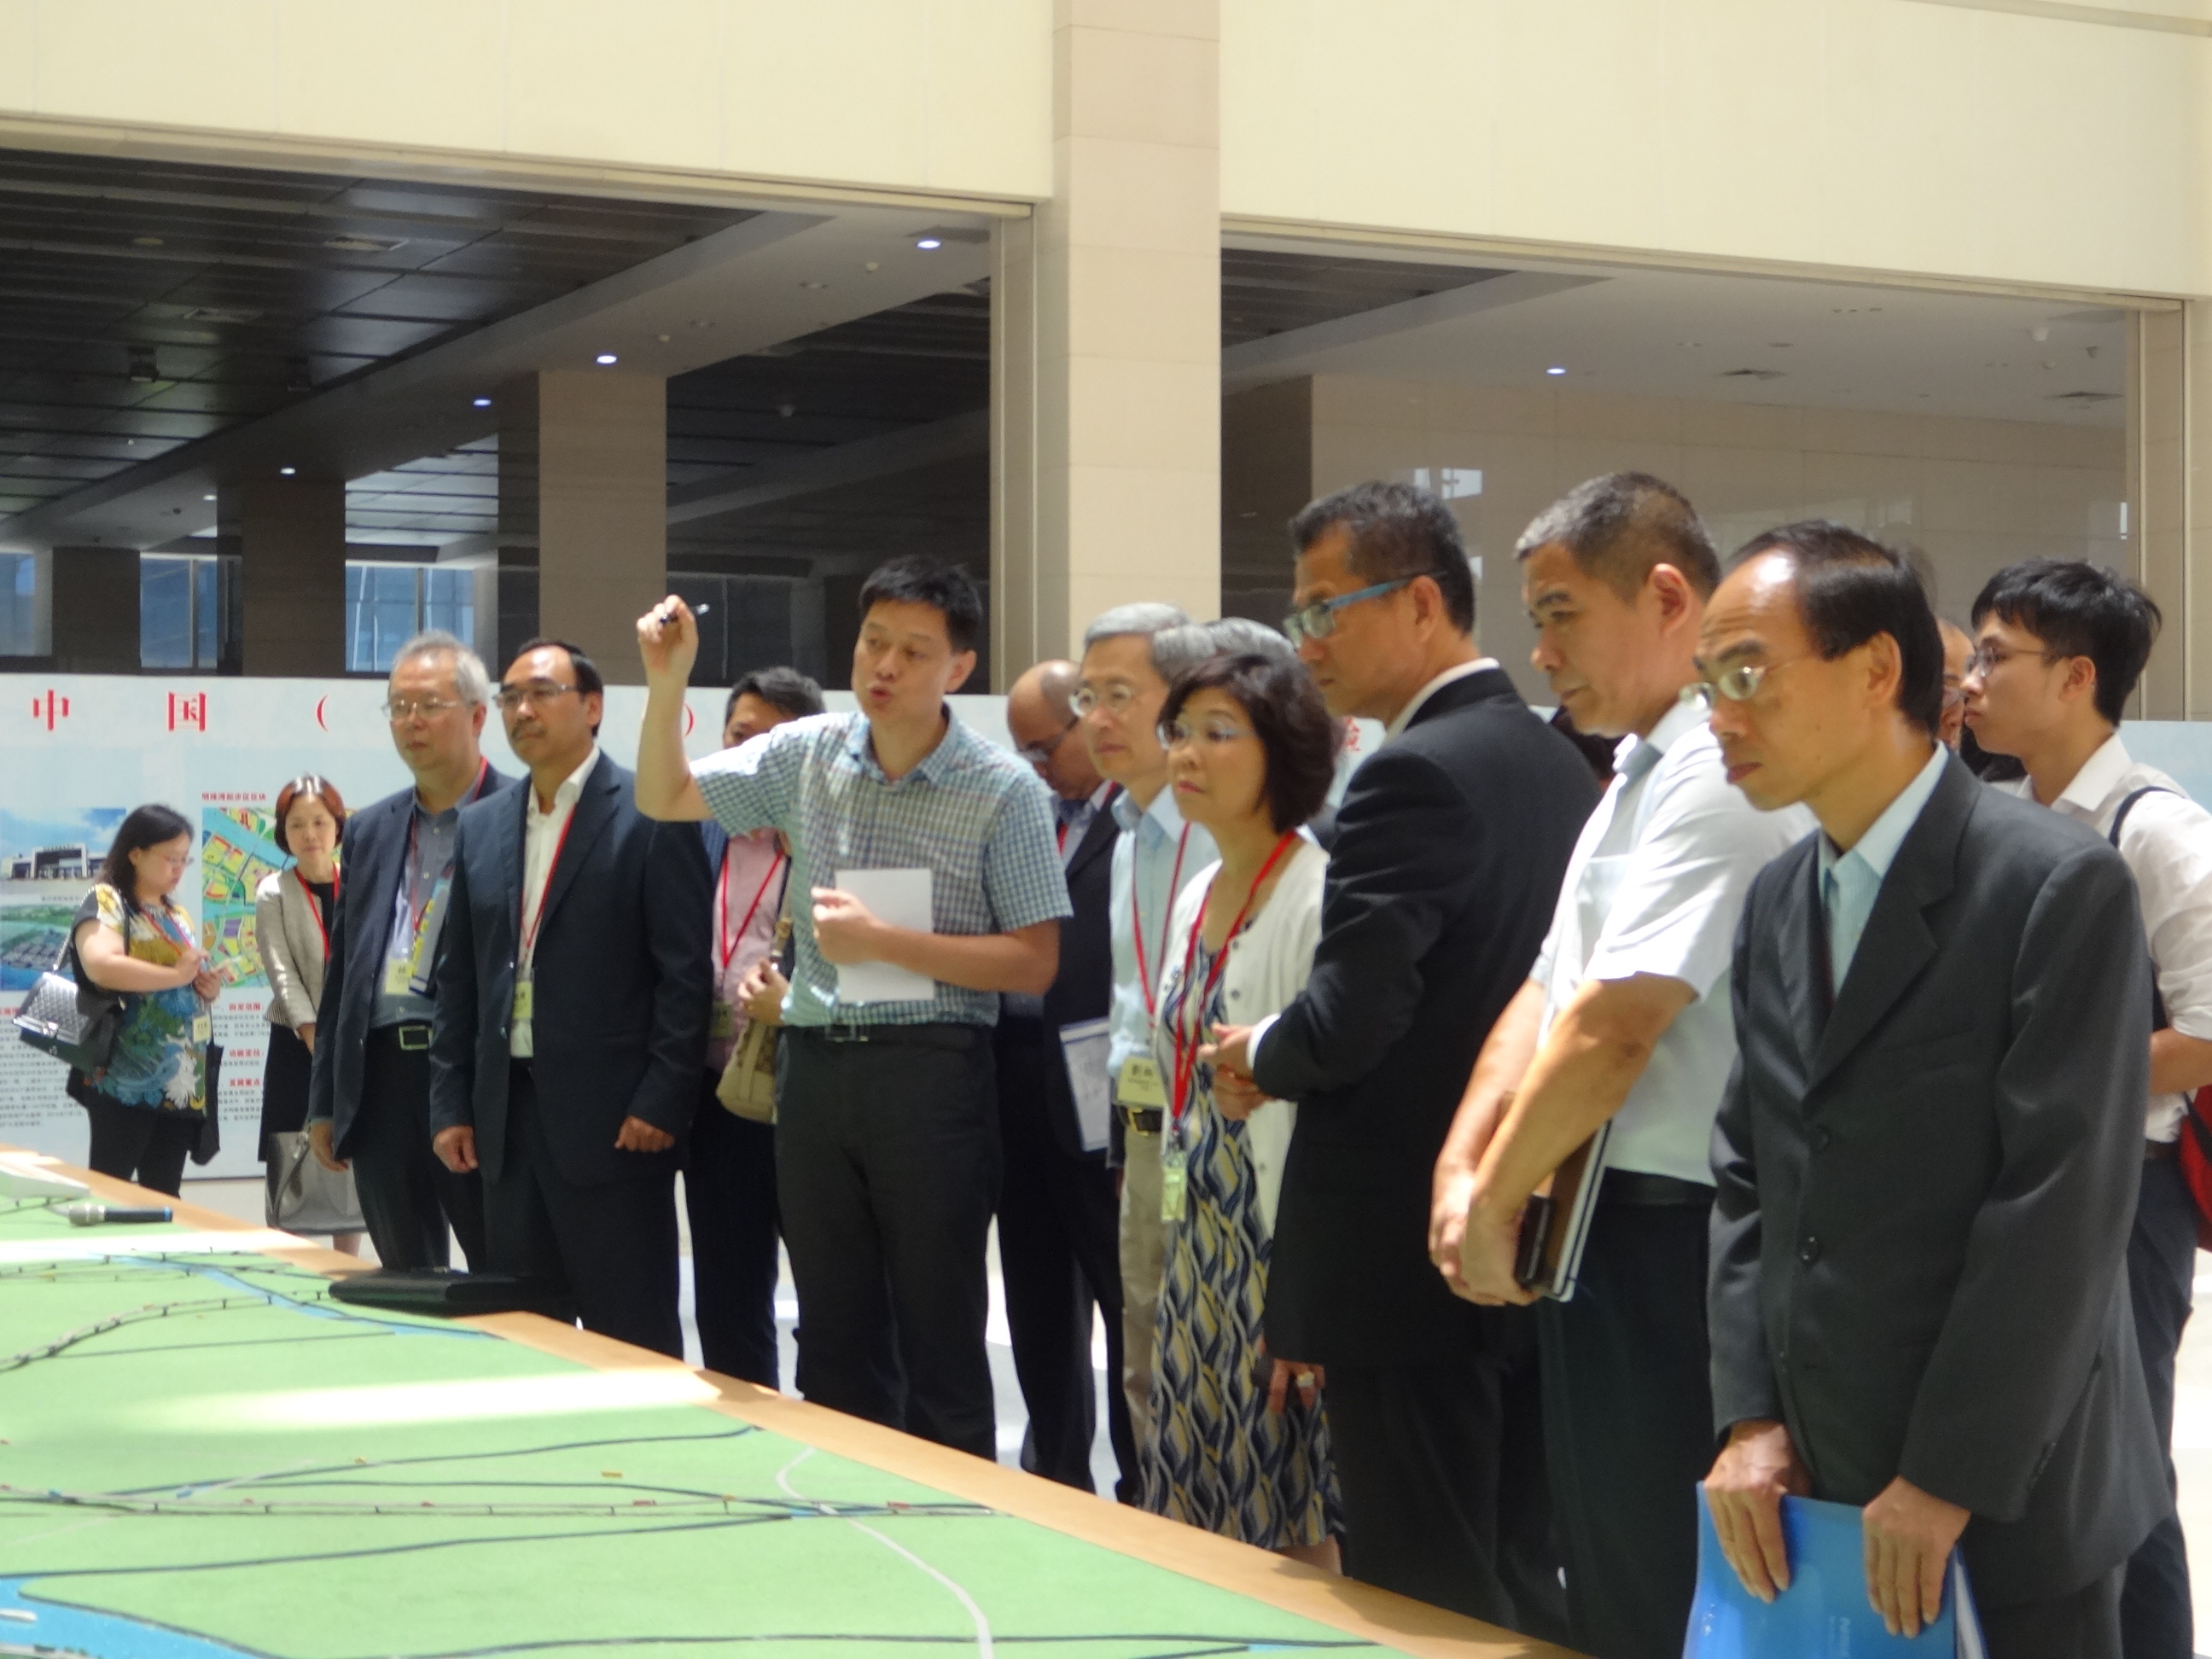 The Development Bureau led members of the professional sectors to visit Qianhai.